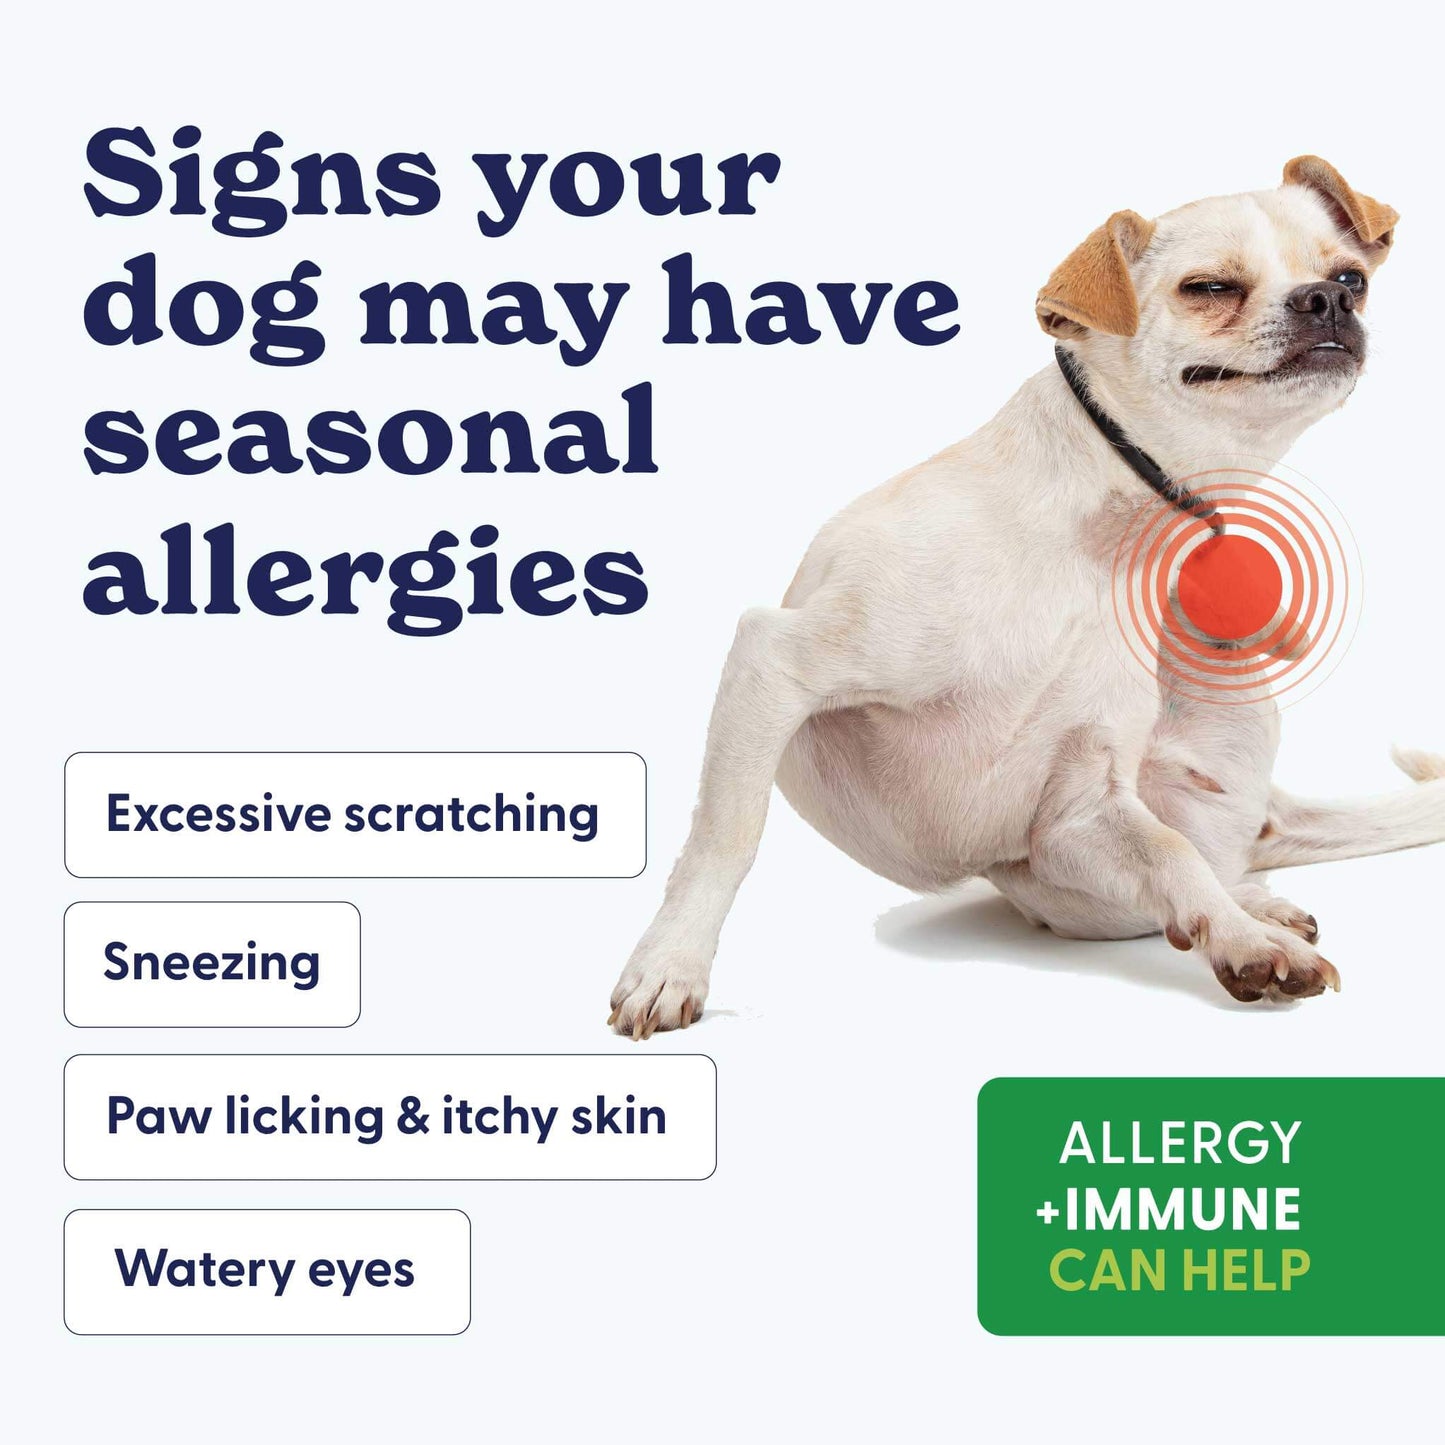 Allergy + Immune